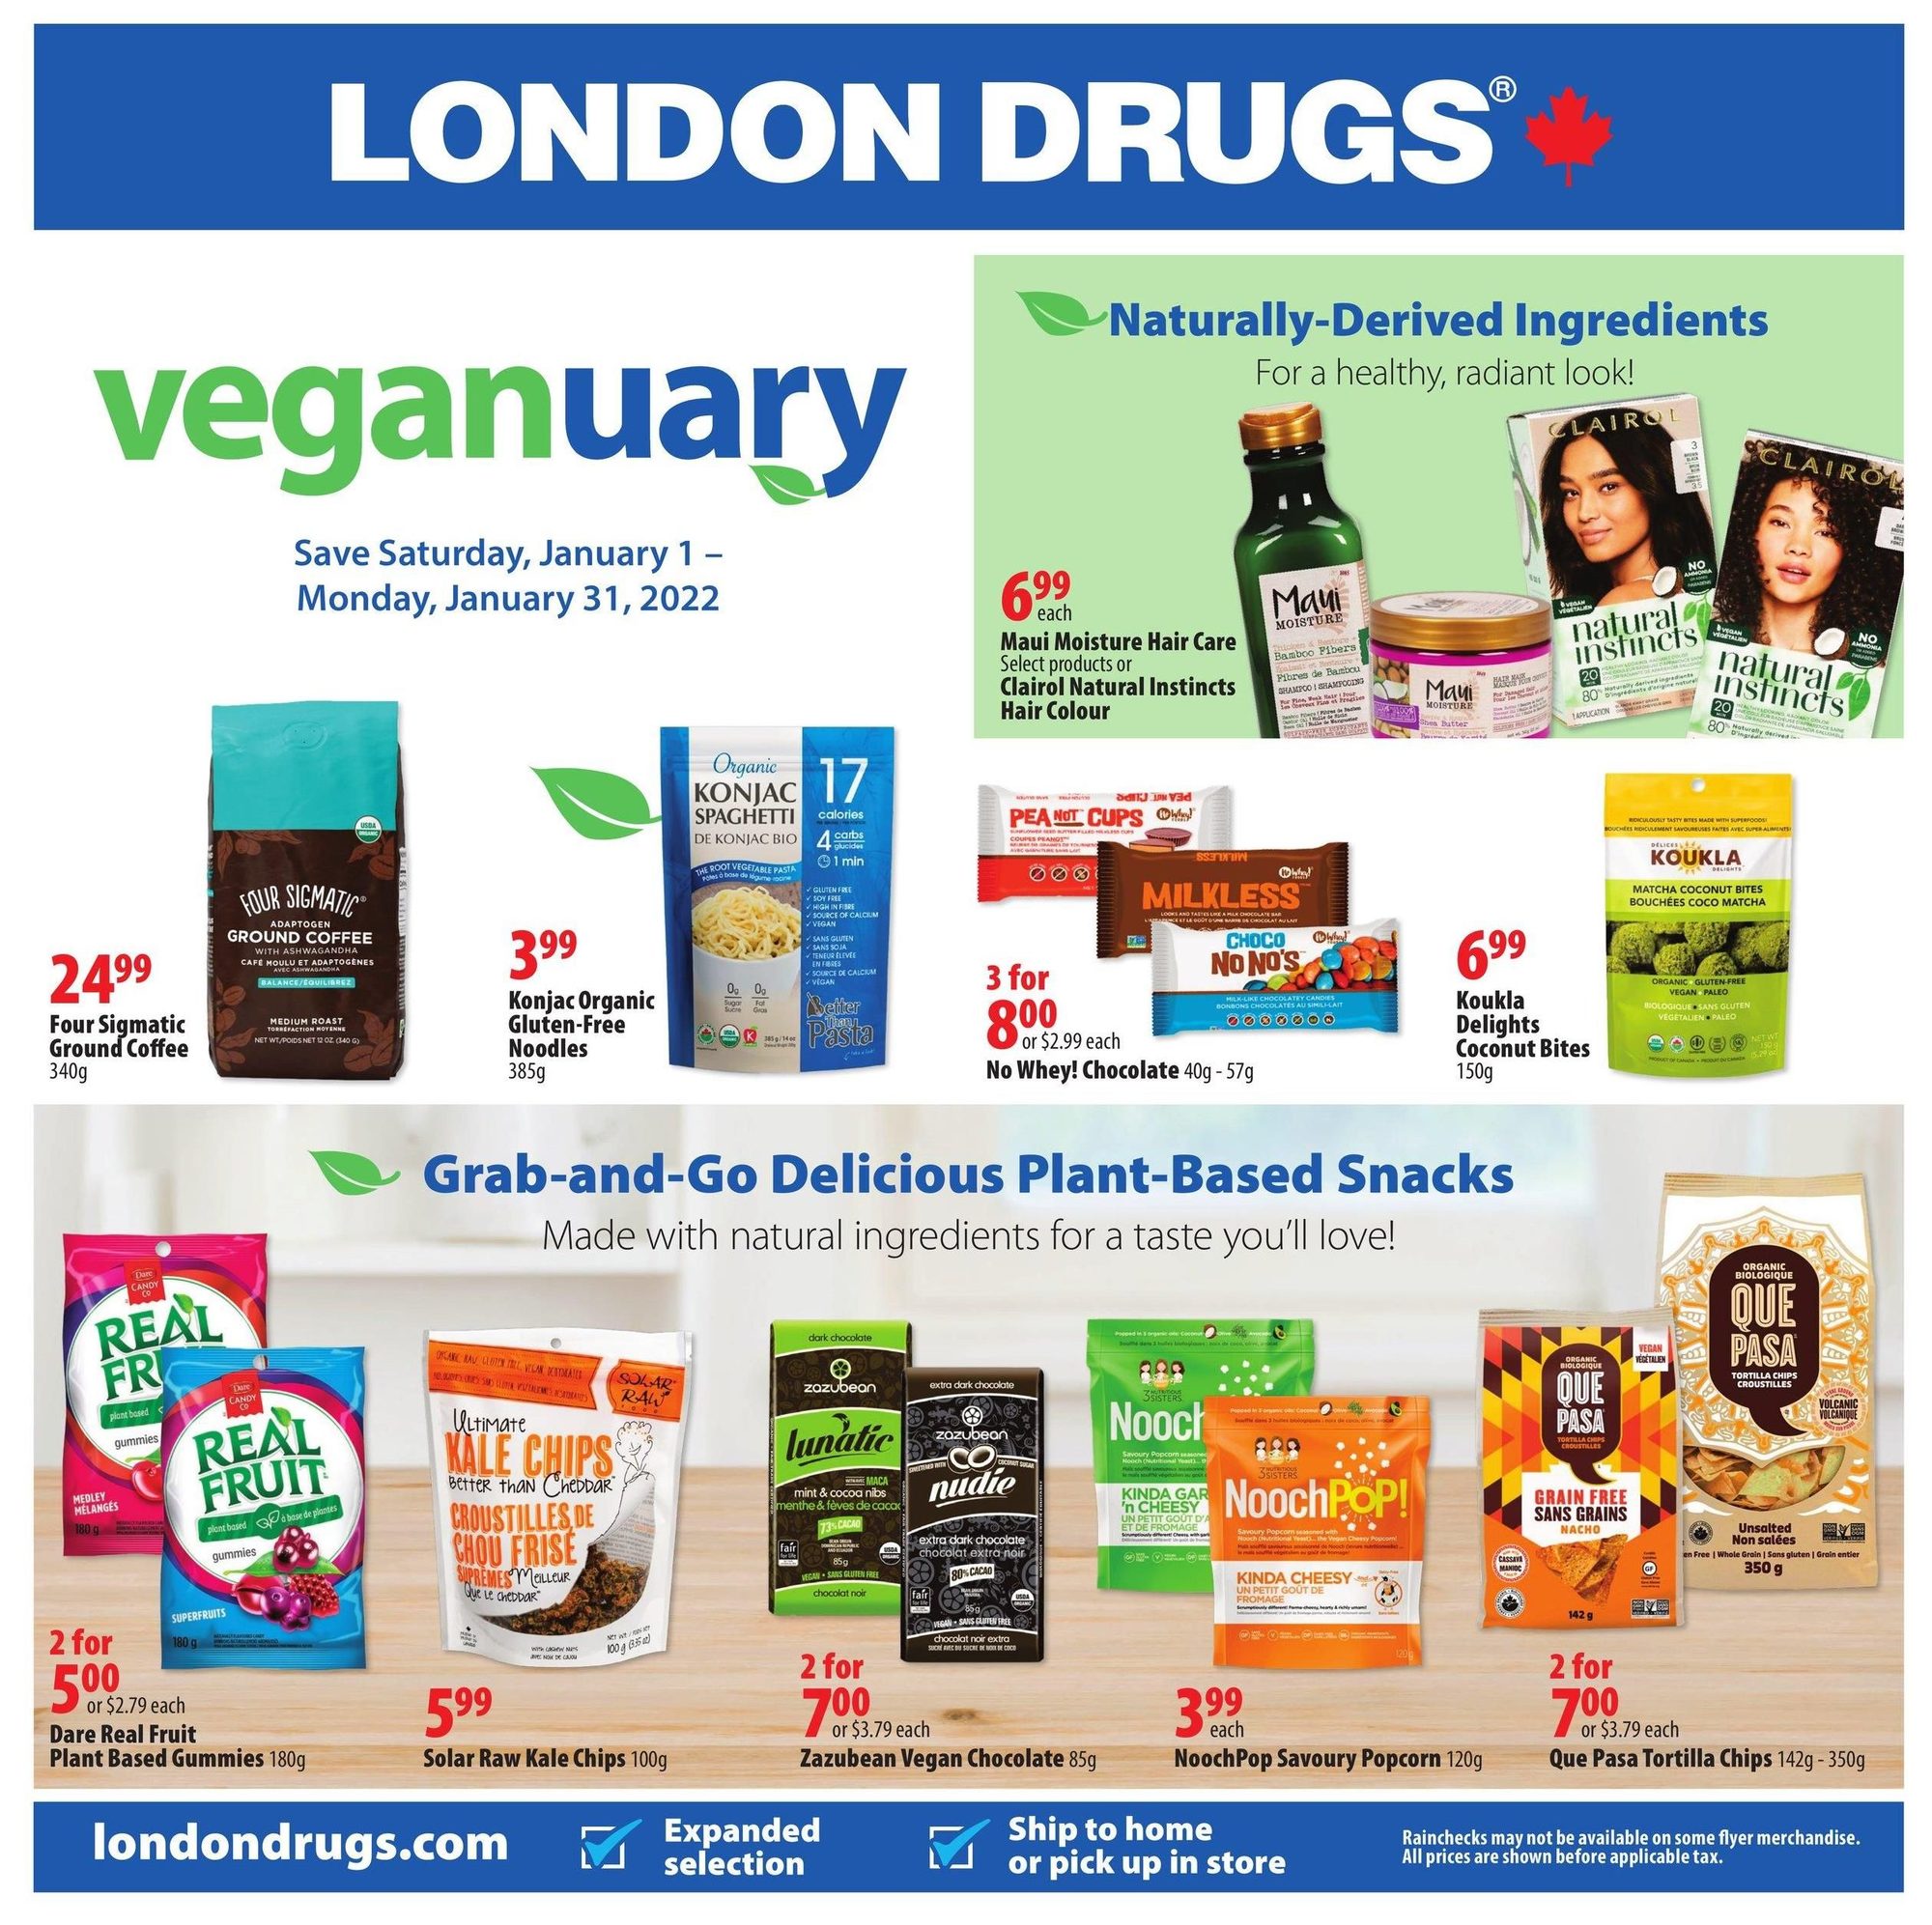 London Drugs - Veganuary